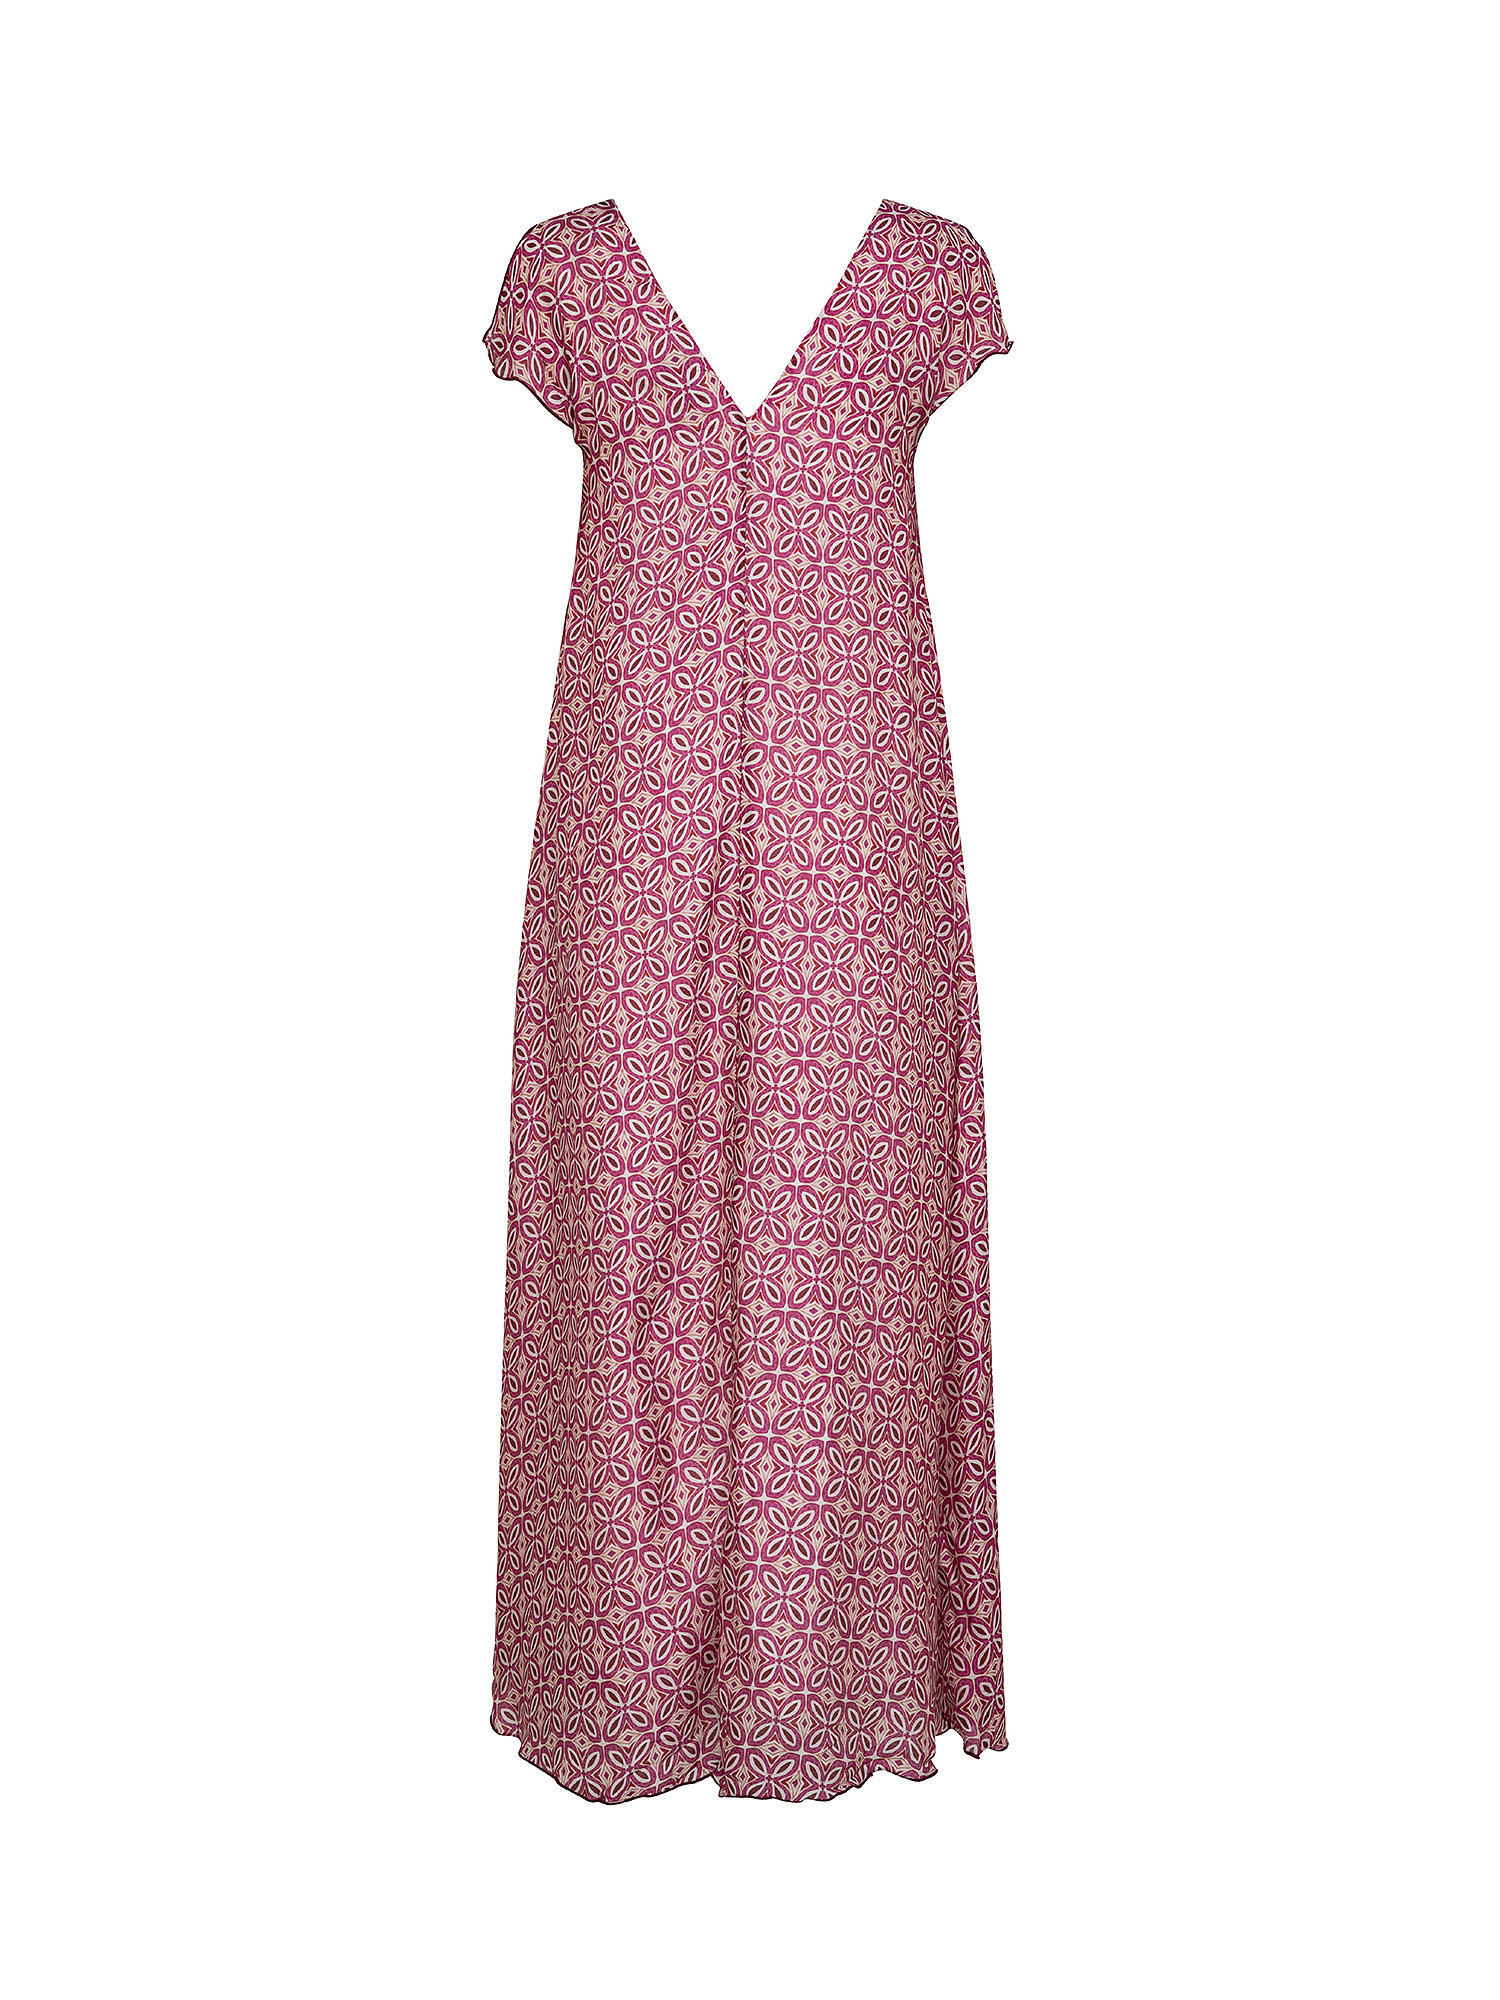 Printed long dress, Pink, large image number 1